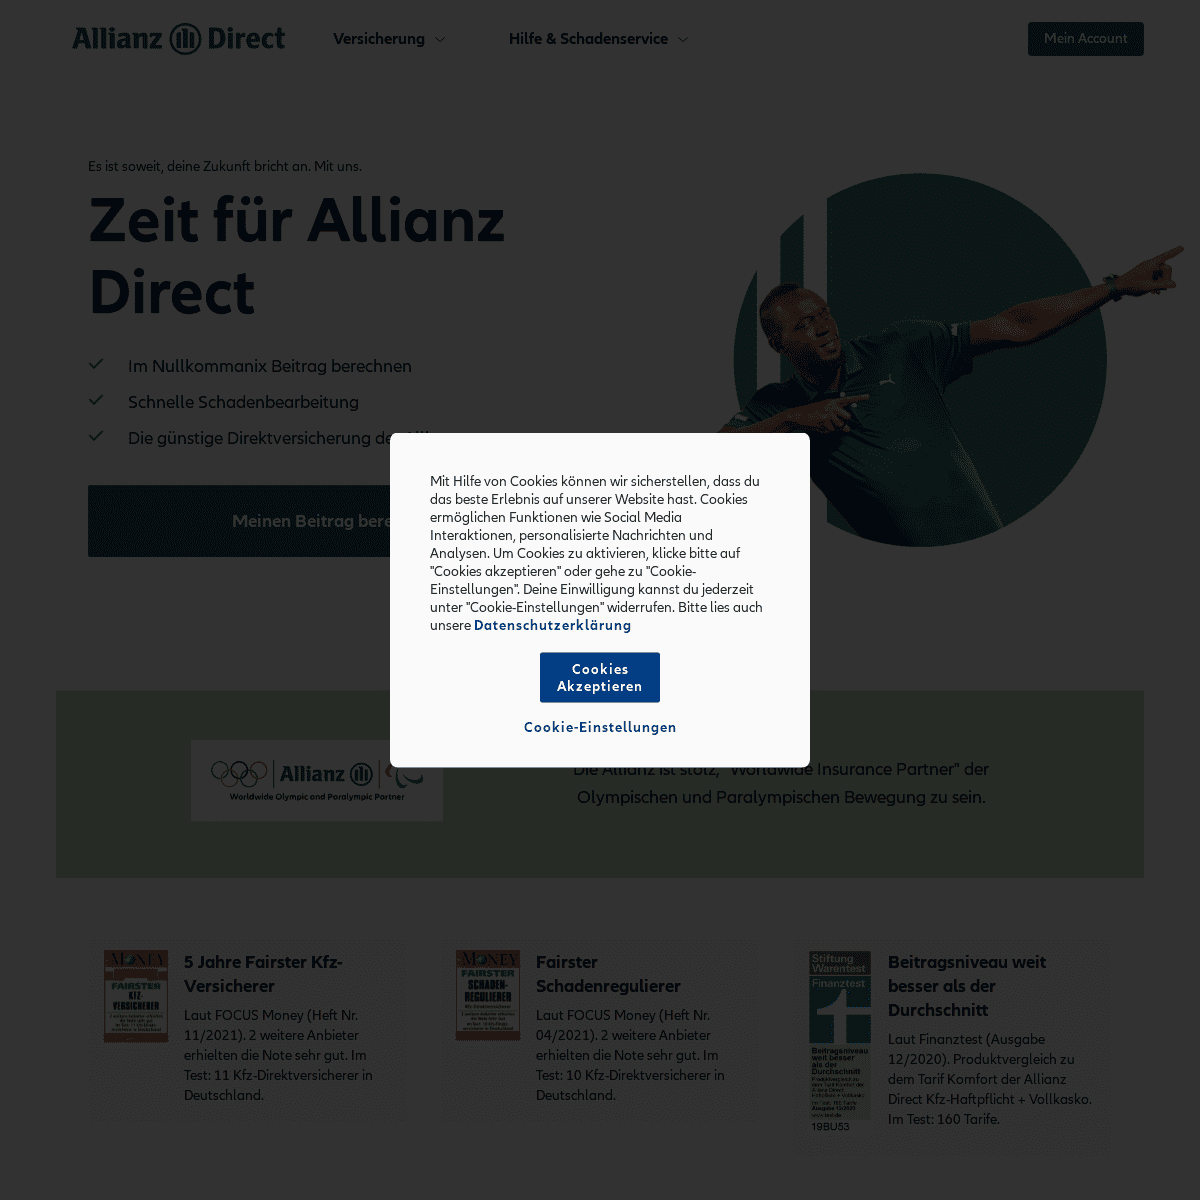 A complete backup of https://allianzdirect.de